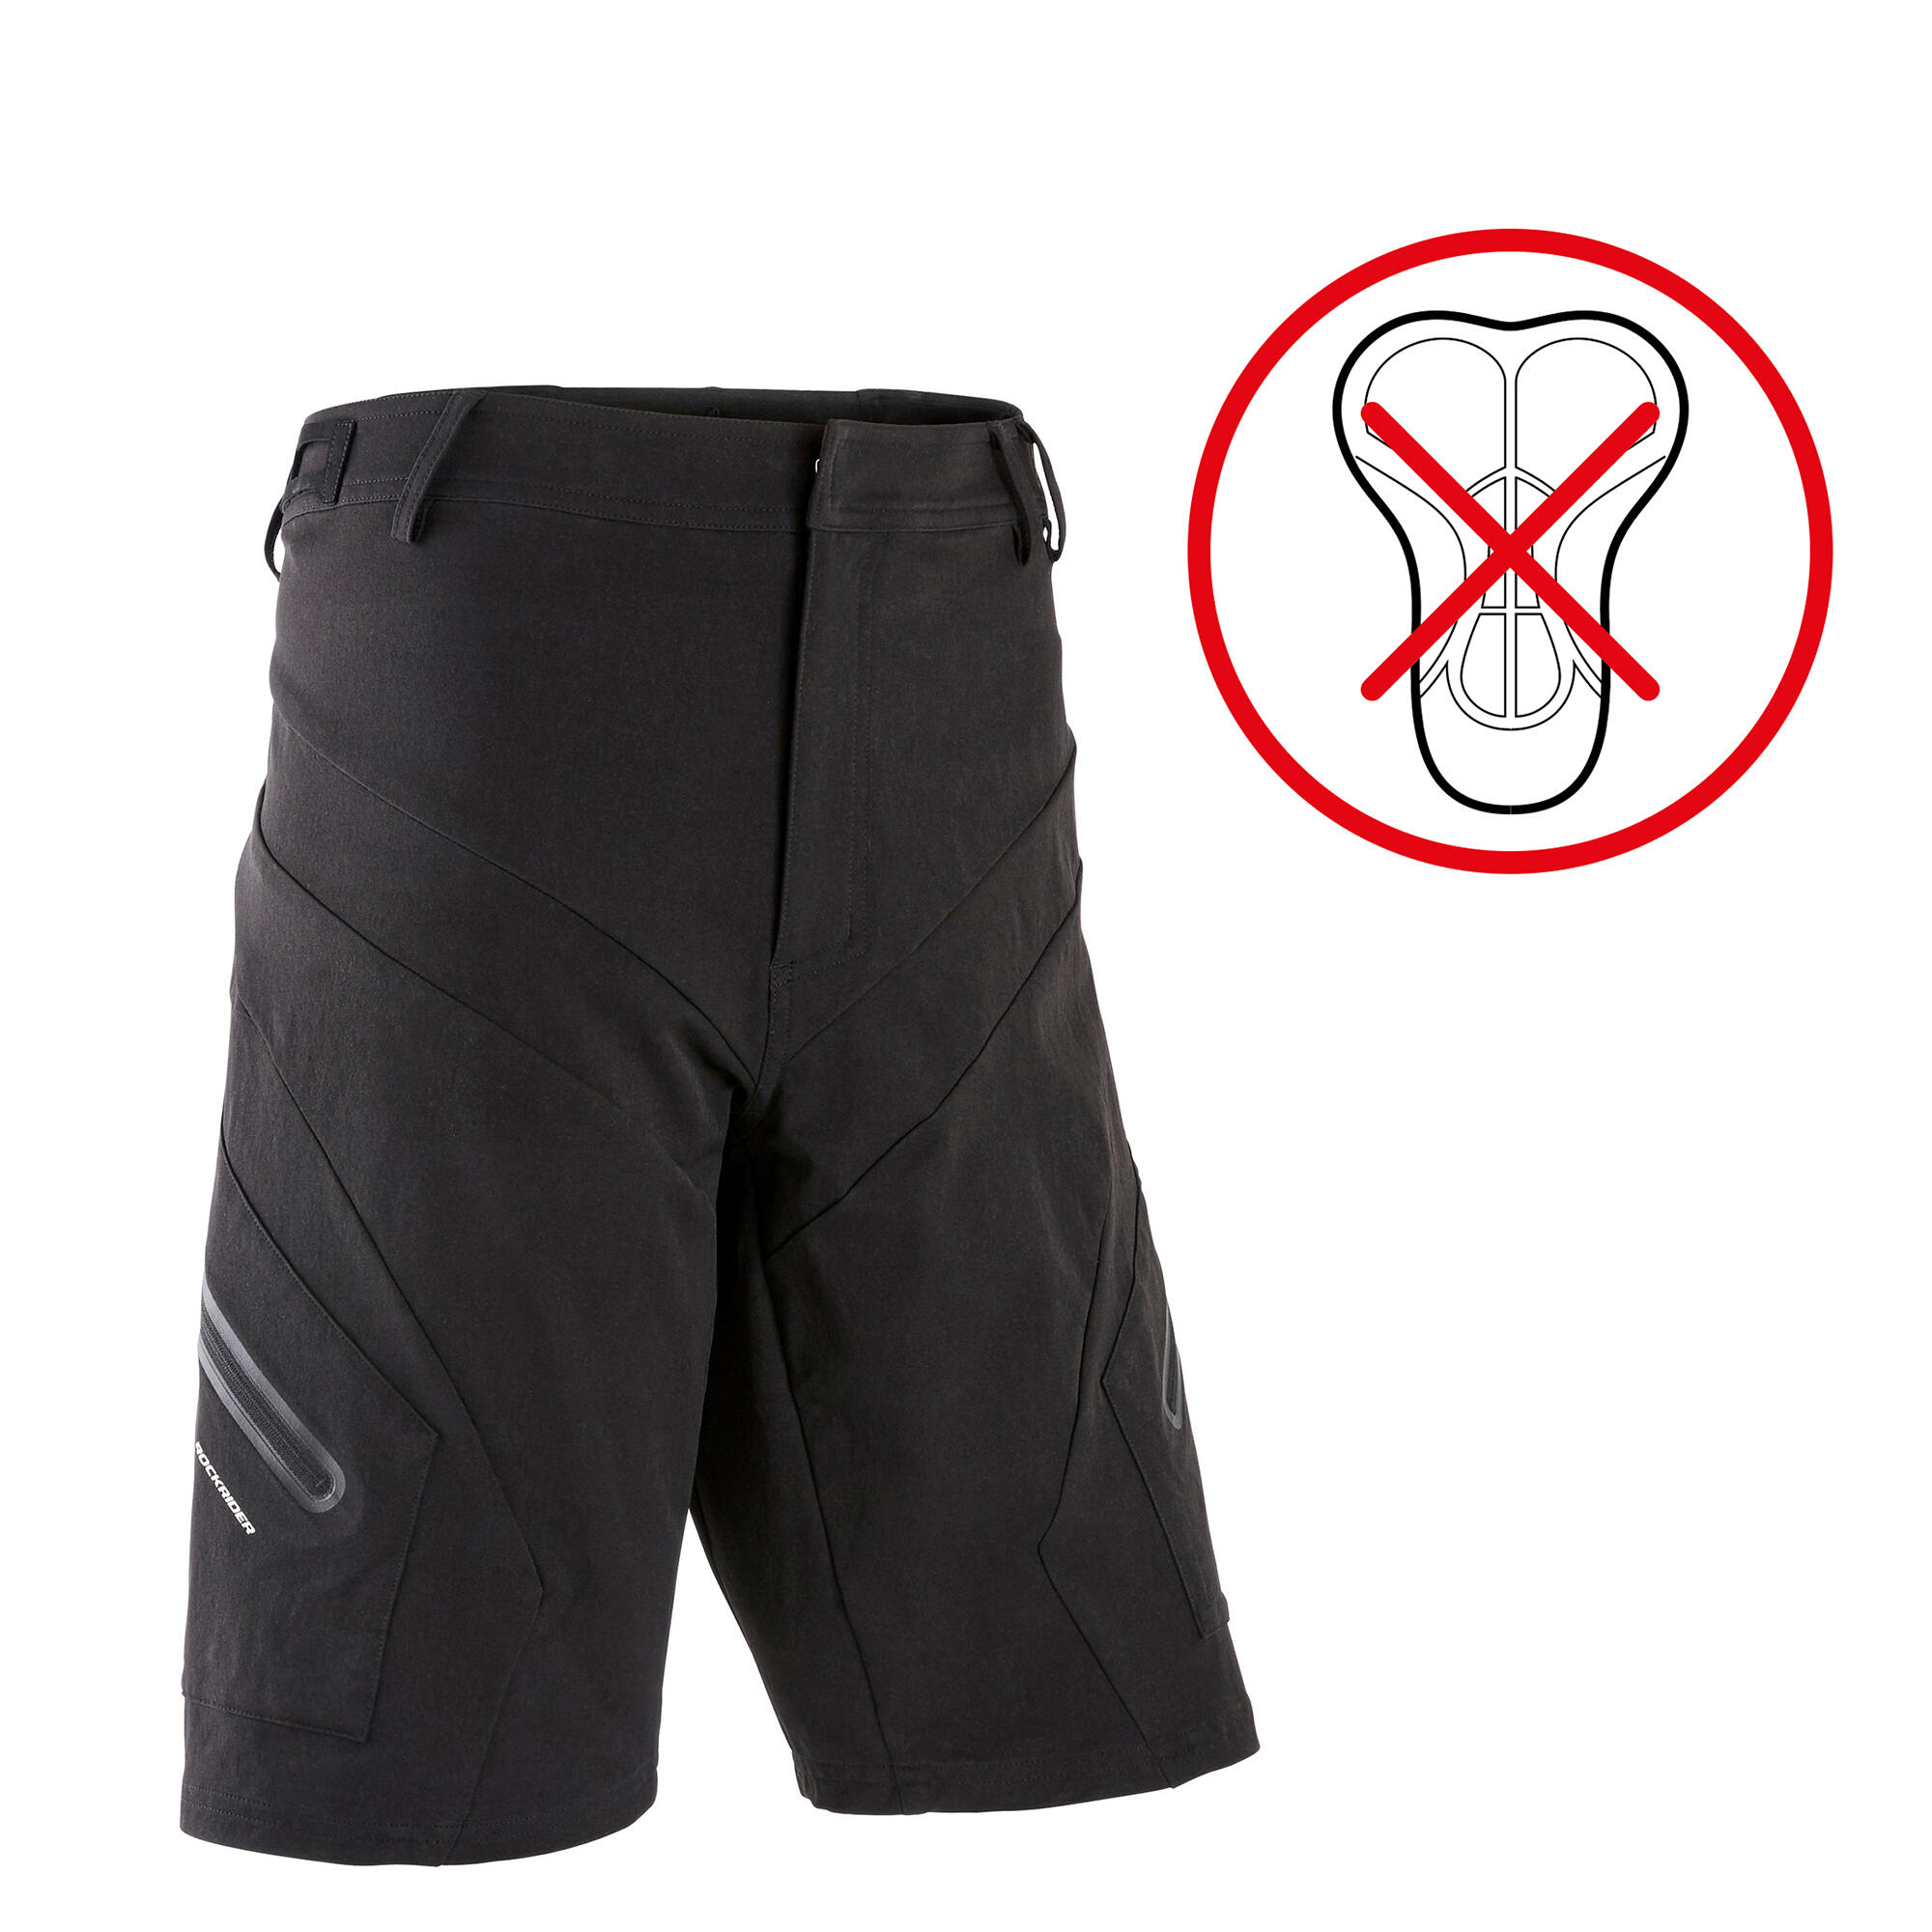 Men's Mountain Biking Shorts - Expl 700 Black - ROCKRIDER